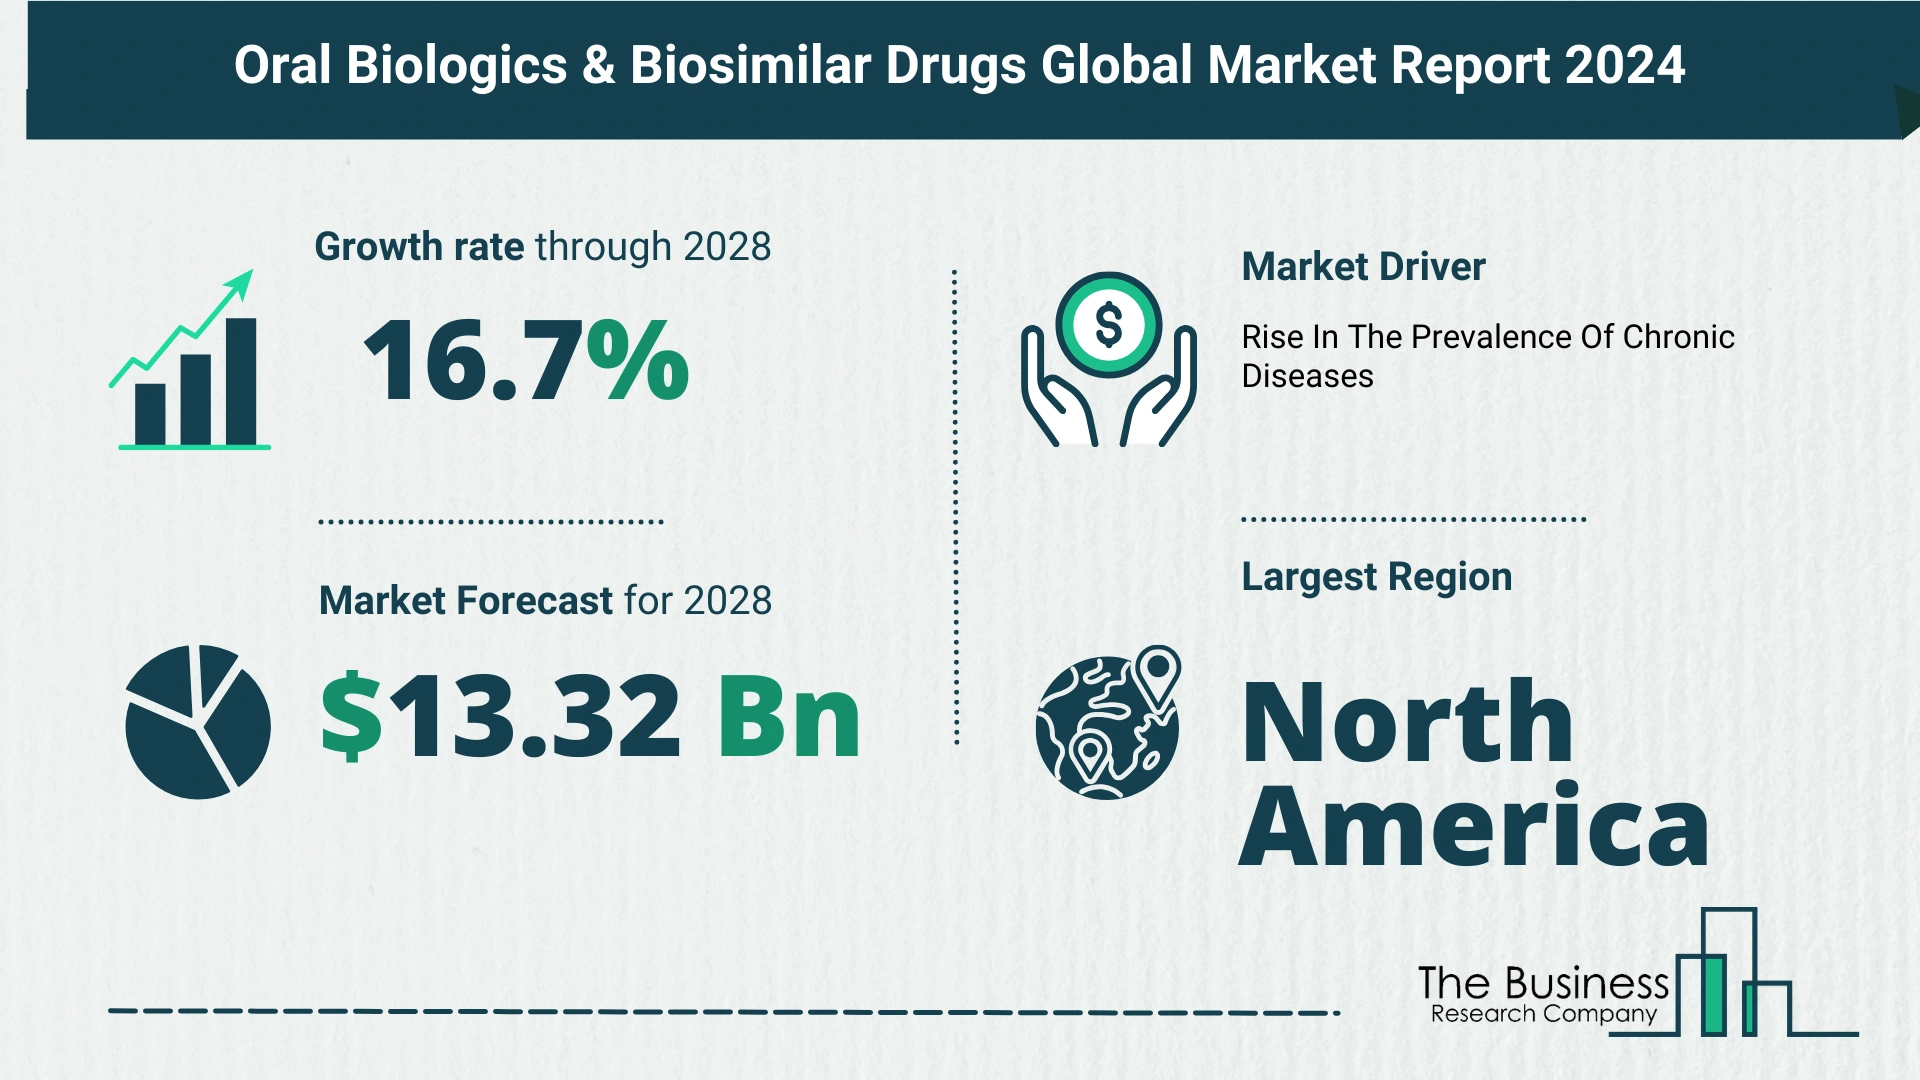 Oral Biologics & Biosimilar Drugs Market Forecast Until 2033 – Estimated Market Size And Growth Rate